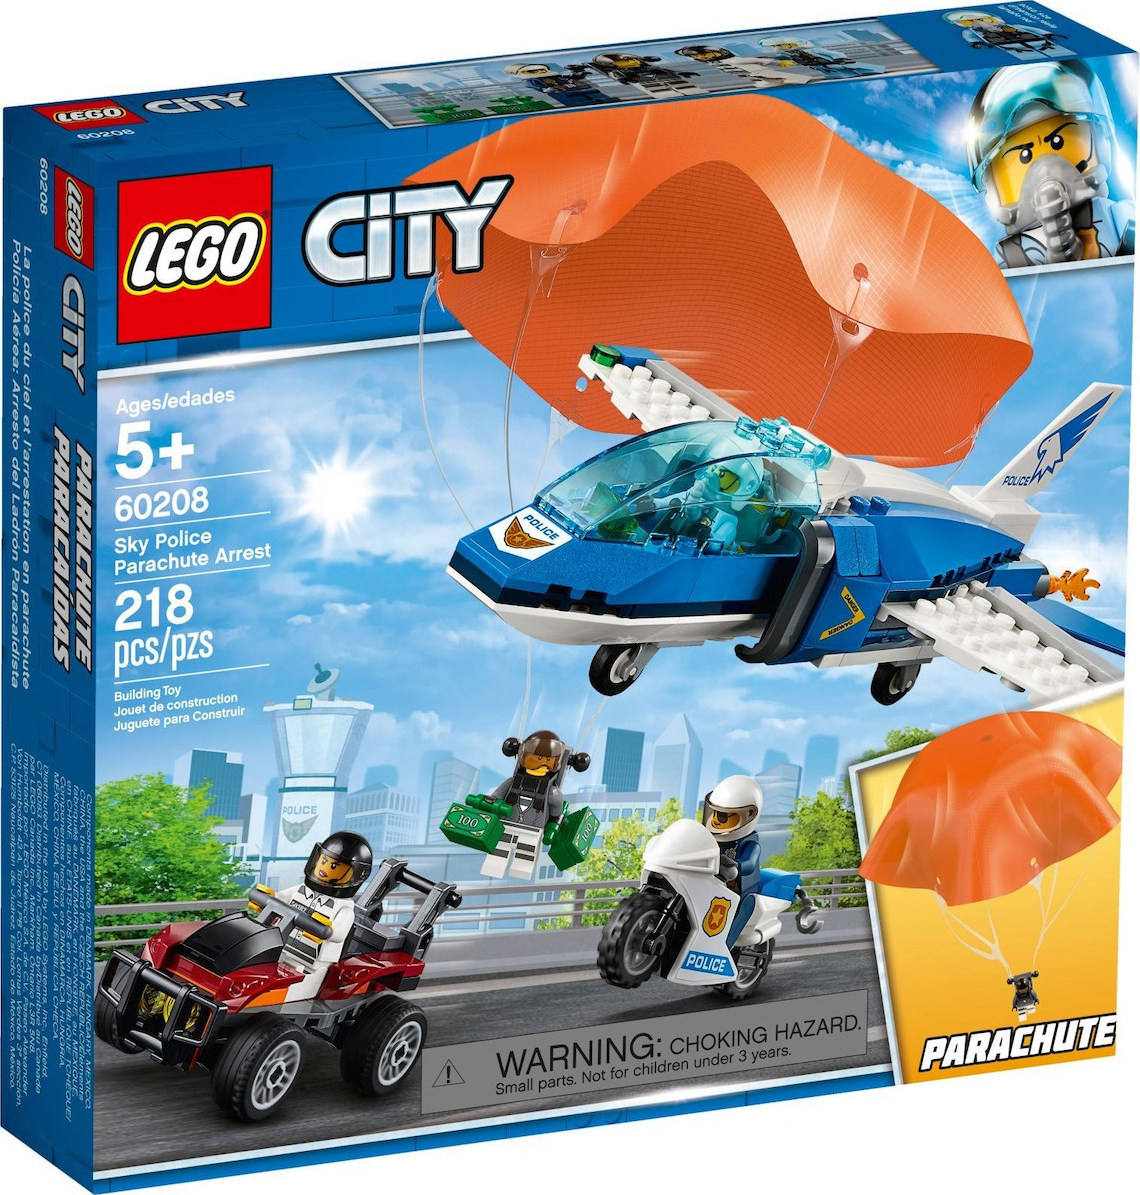 Lego City - Sky Police Parachute Arrest 60208